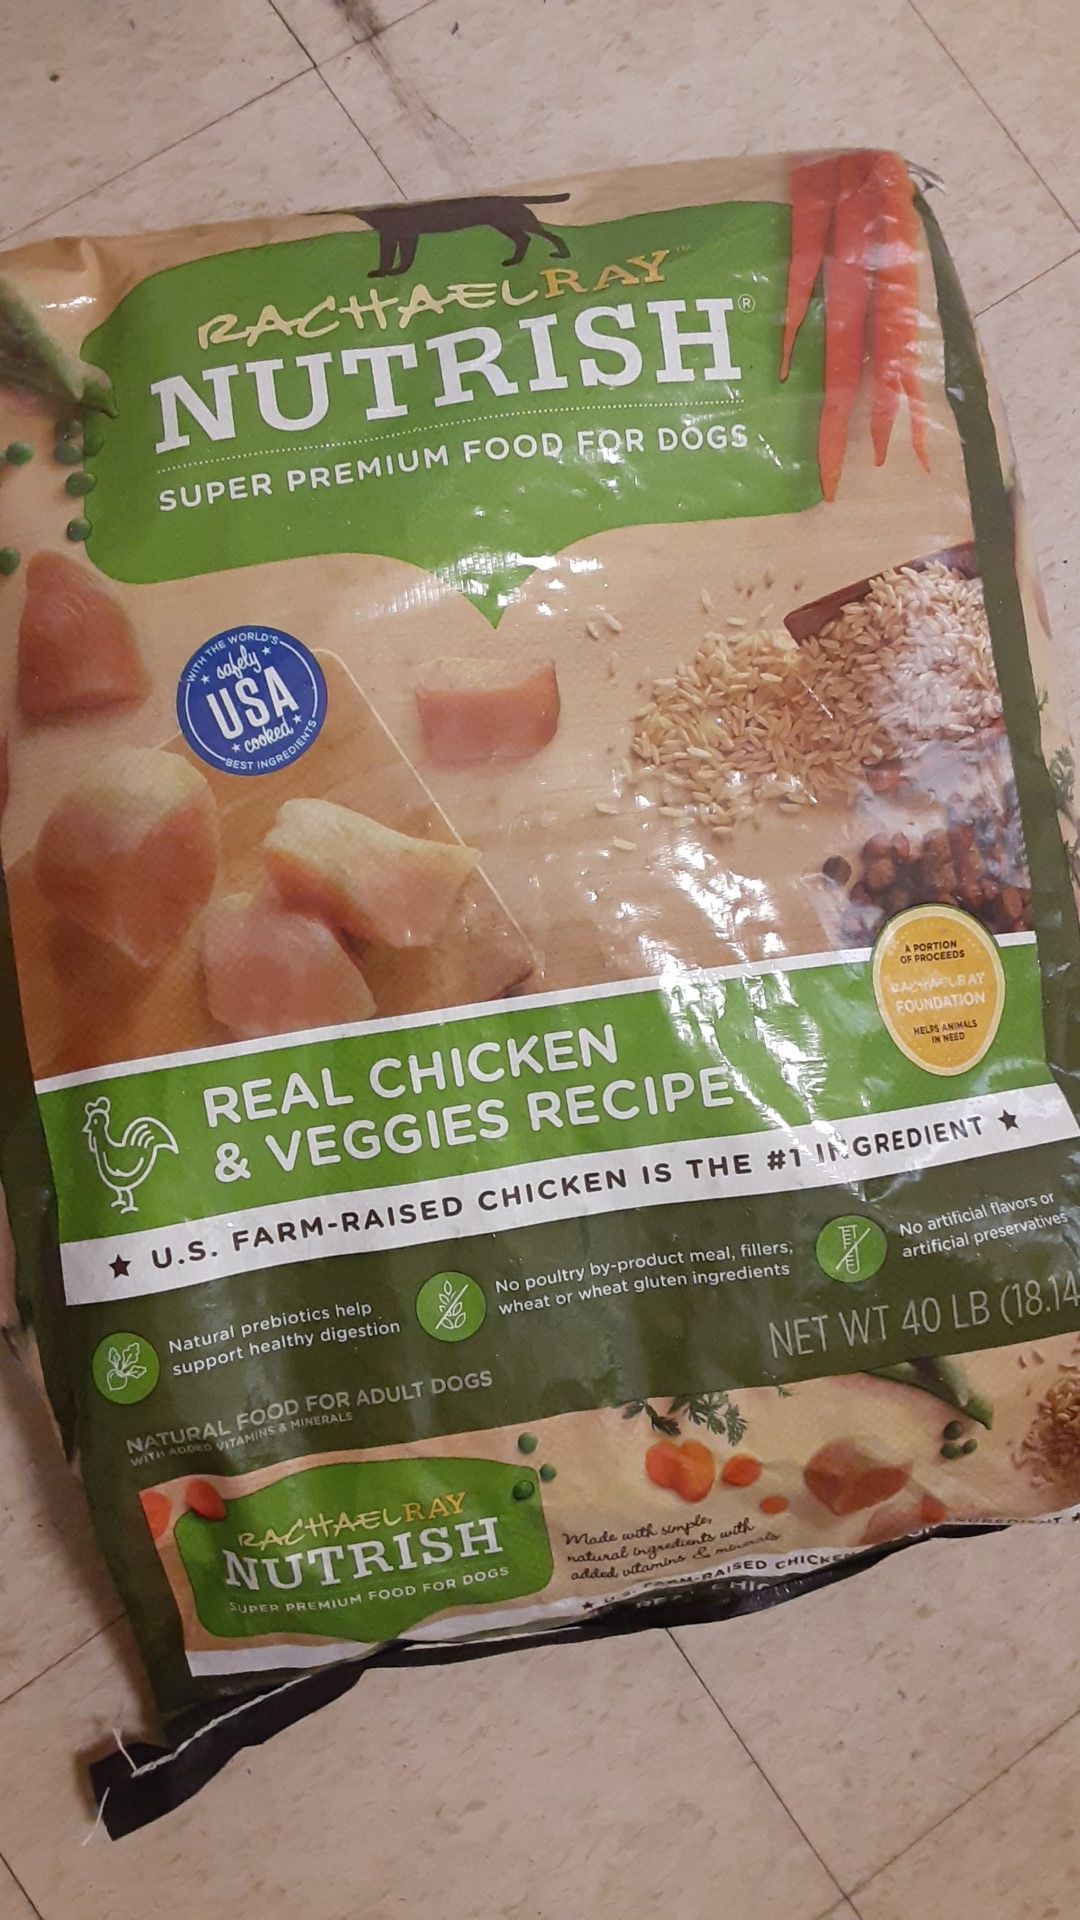 Rachael ray nutrish super premium food for dog.